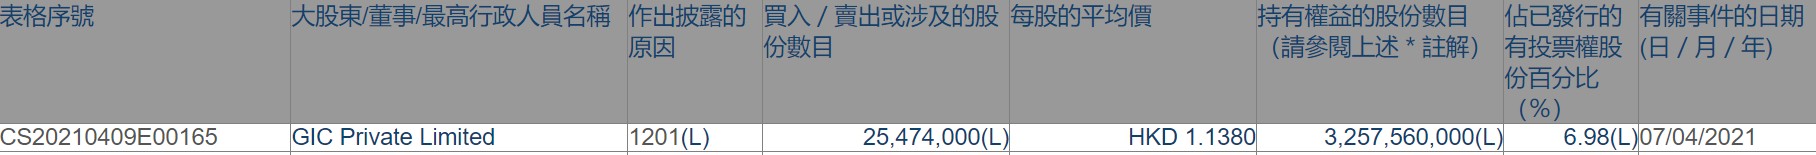 GIC Private Limited减持中国铁塔(00788)2547.4万股，每股作价1.1380港元